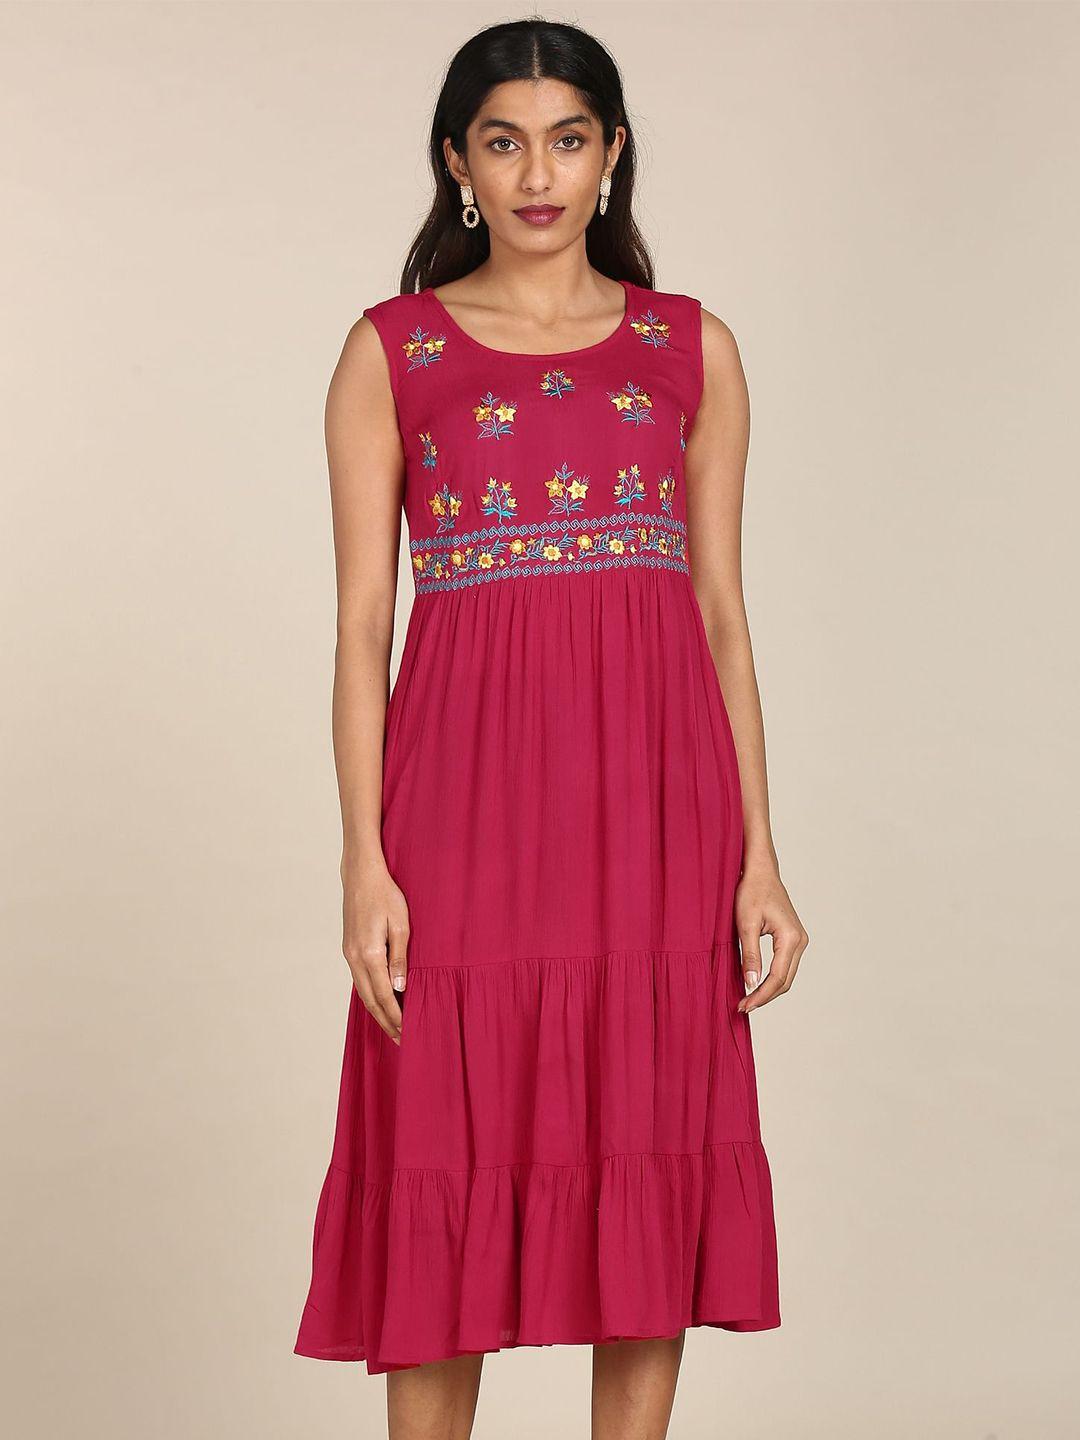 karigari-pink-ethnic-motifs-embroidered-ethnic-a-line-midi-dress